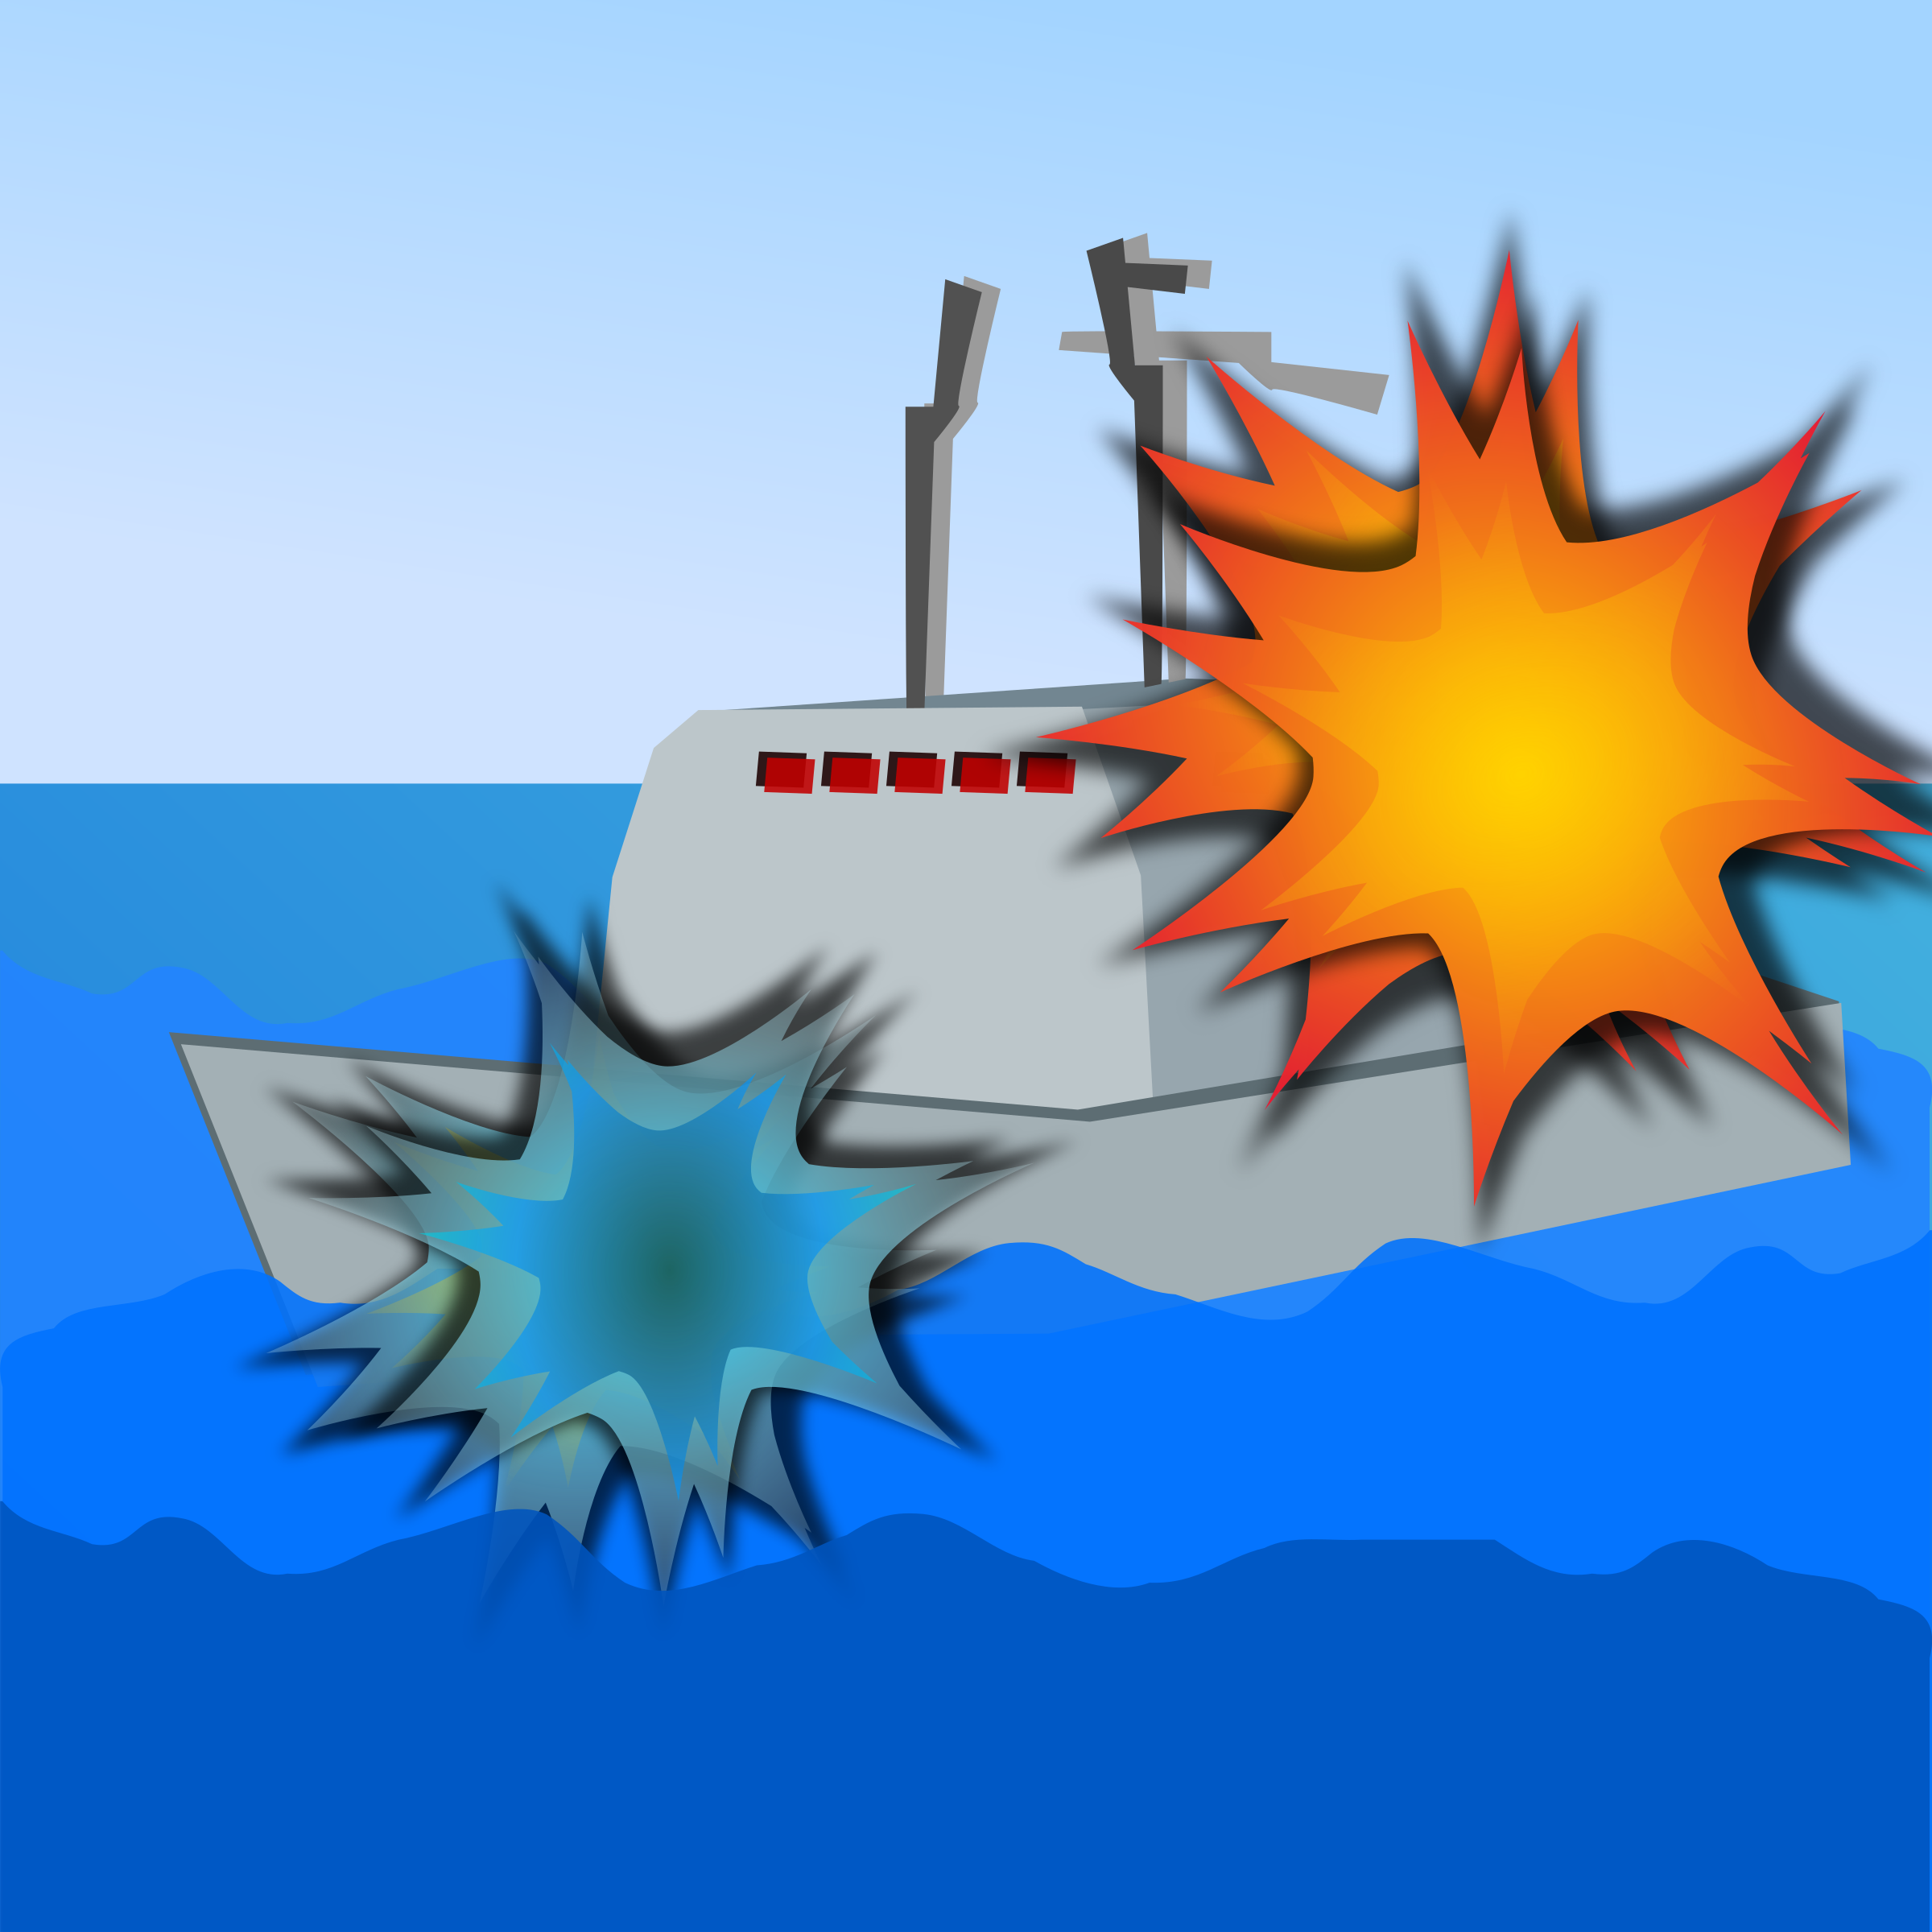 Ship Sea Battle SVG Clip arts